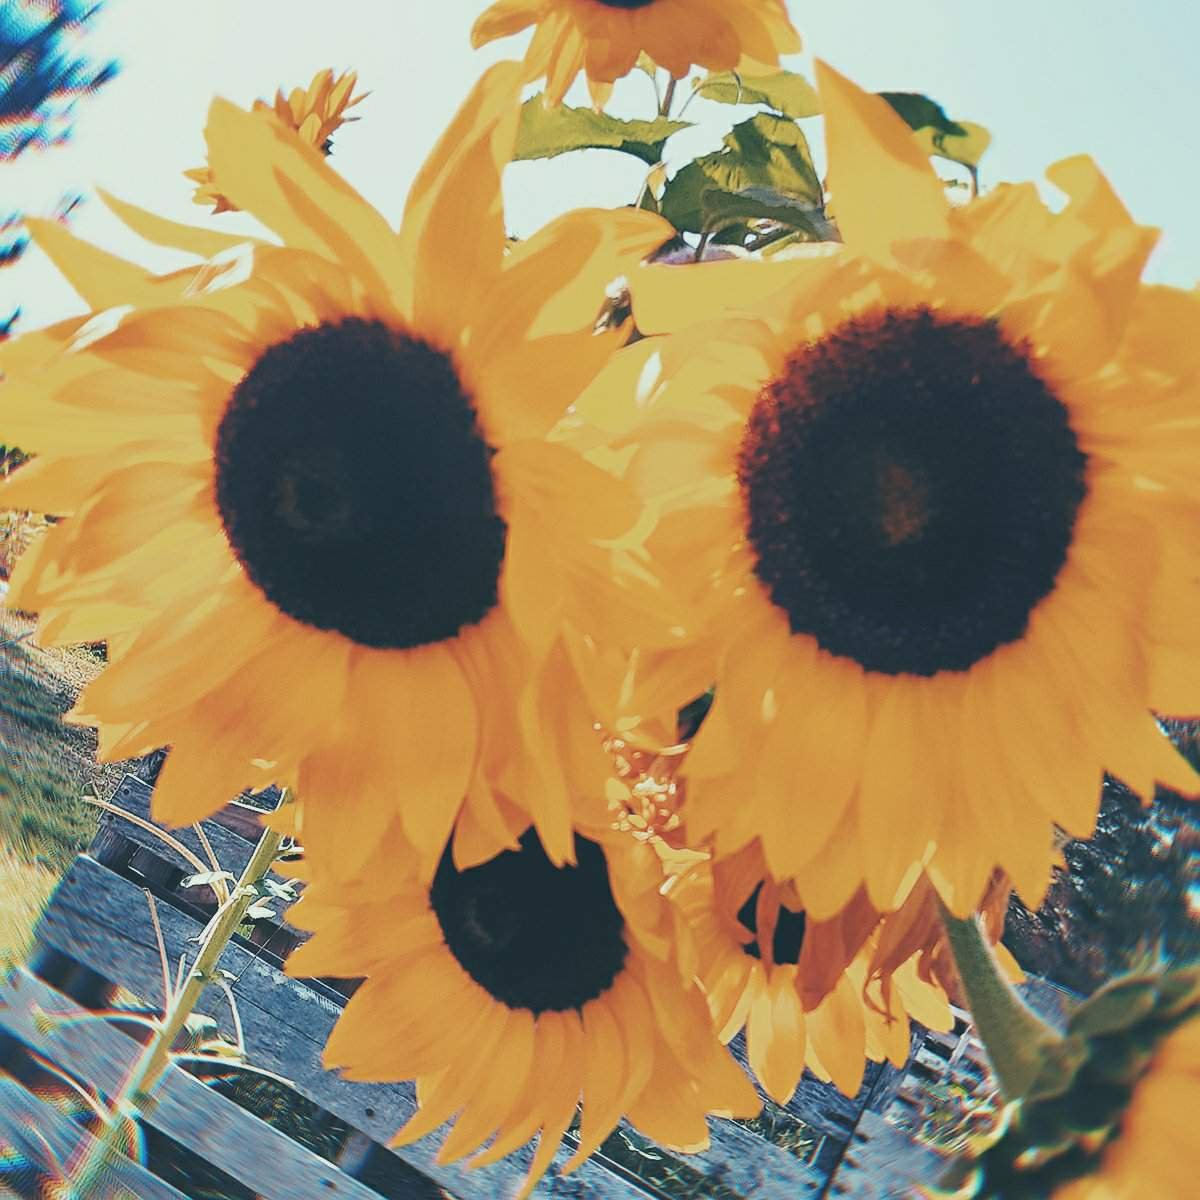 Sunflower Aesthetic: Beautiful, Creative, Inspiring